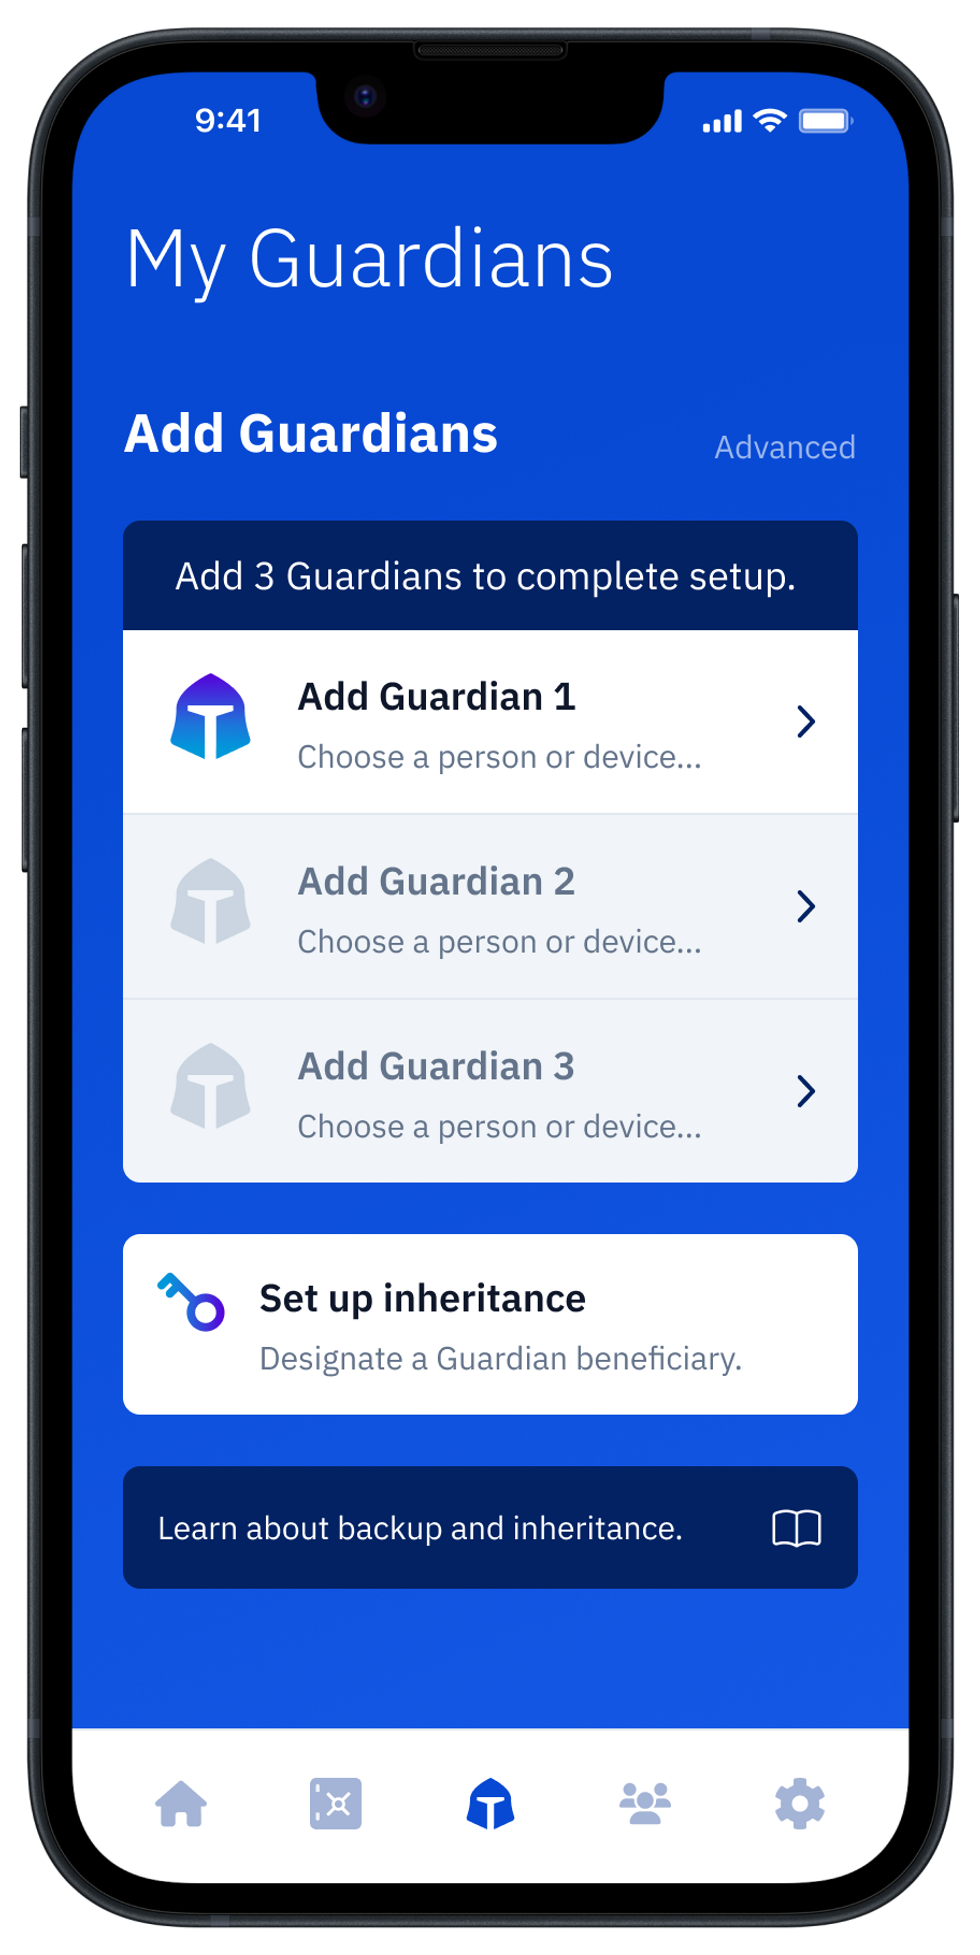 Guard app "Add Guardians" screen showing 3 Guardians